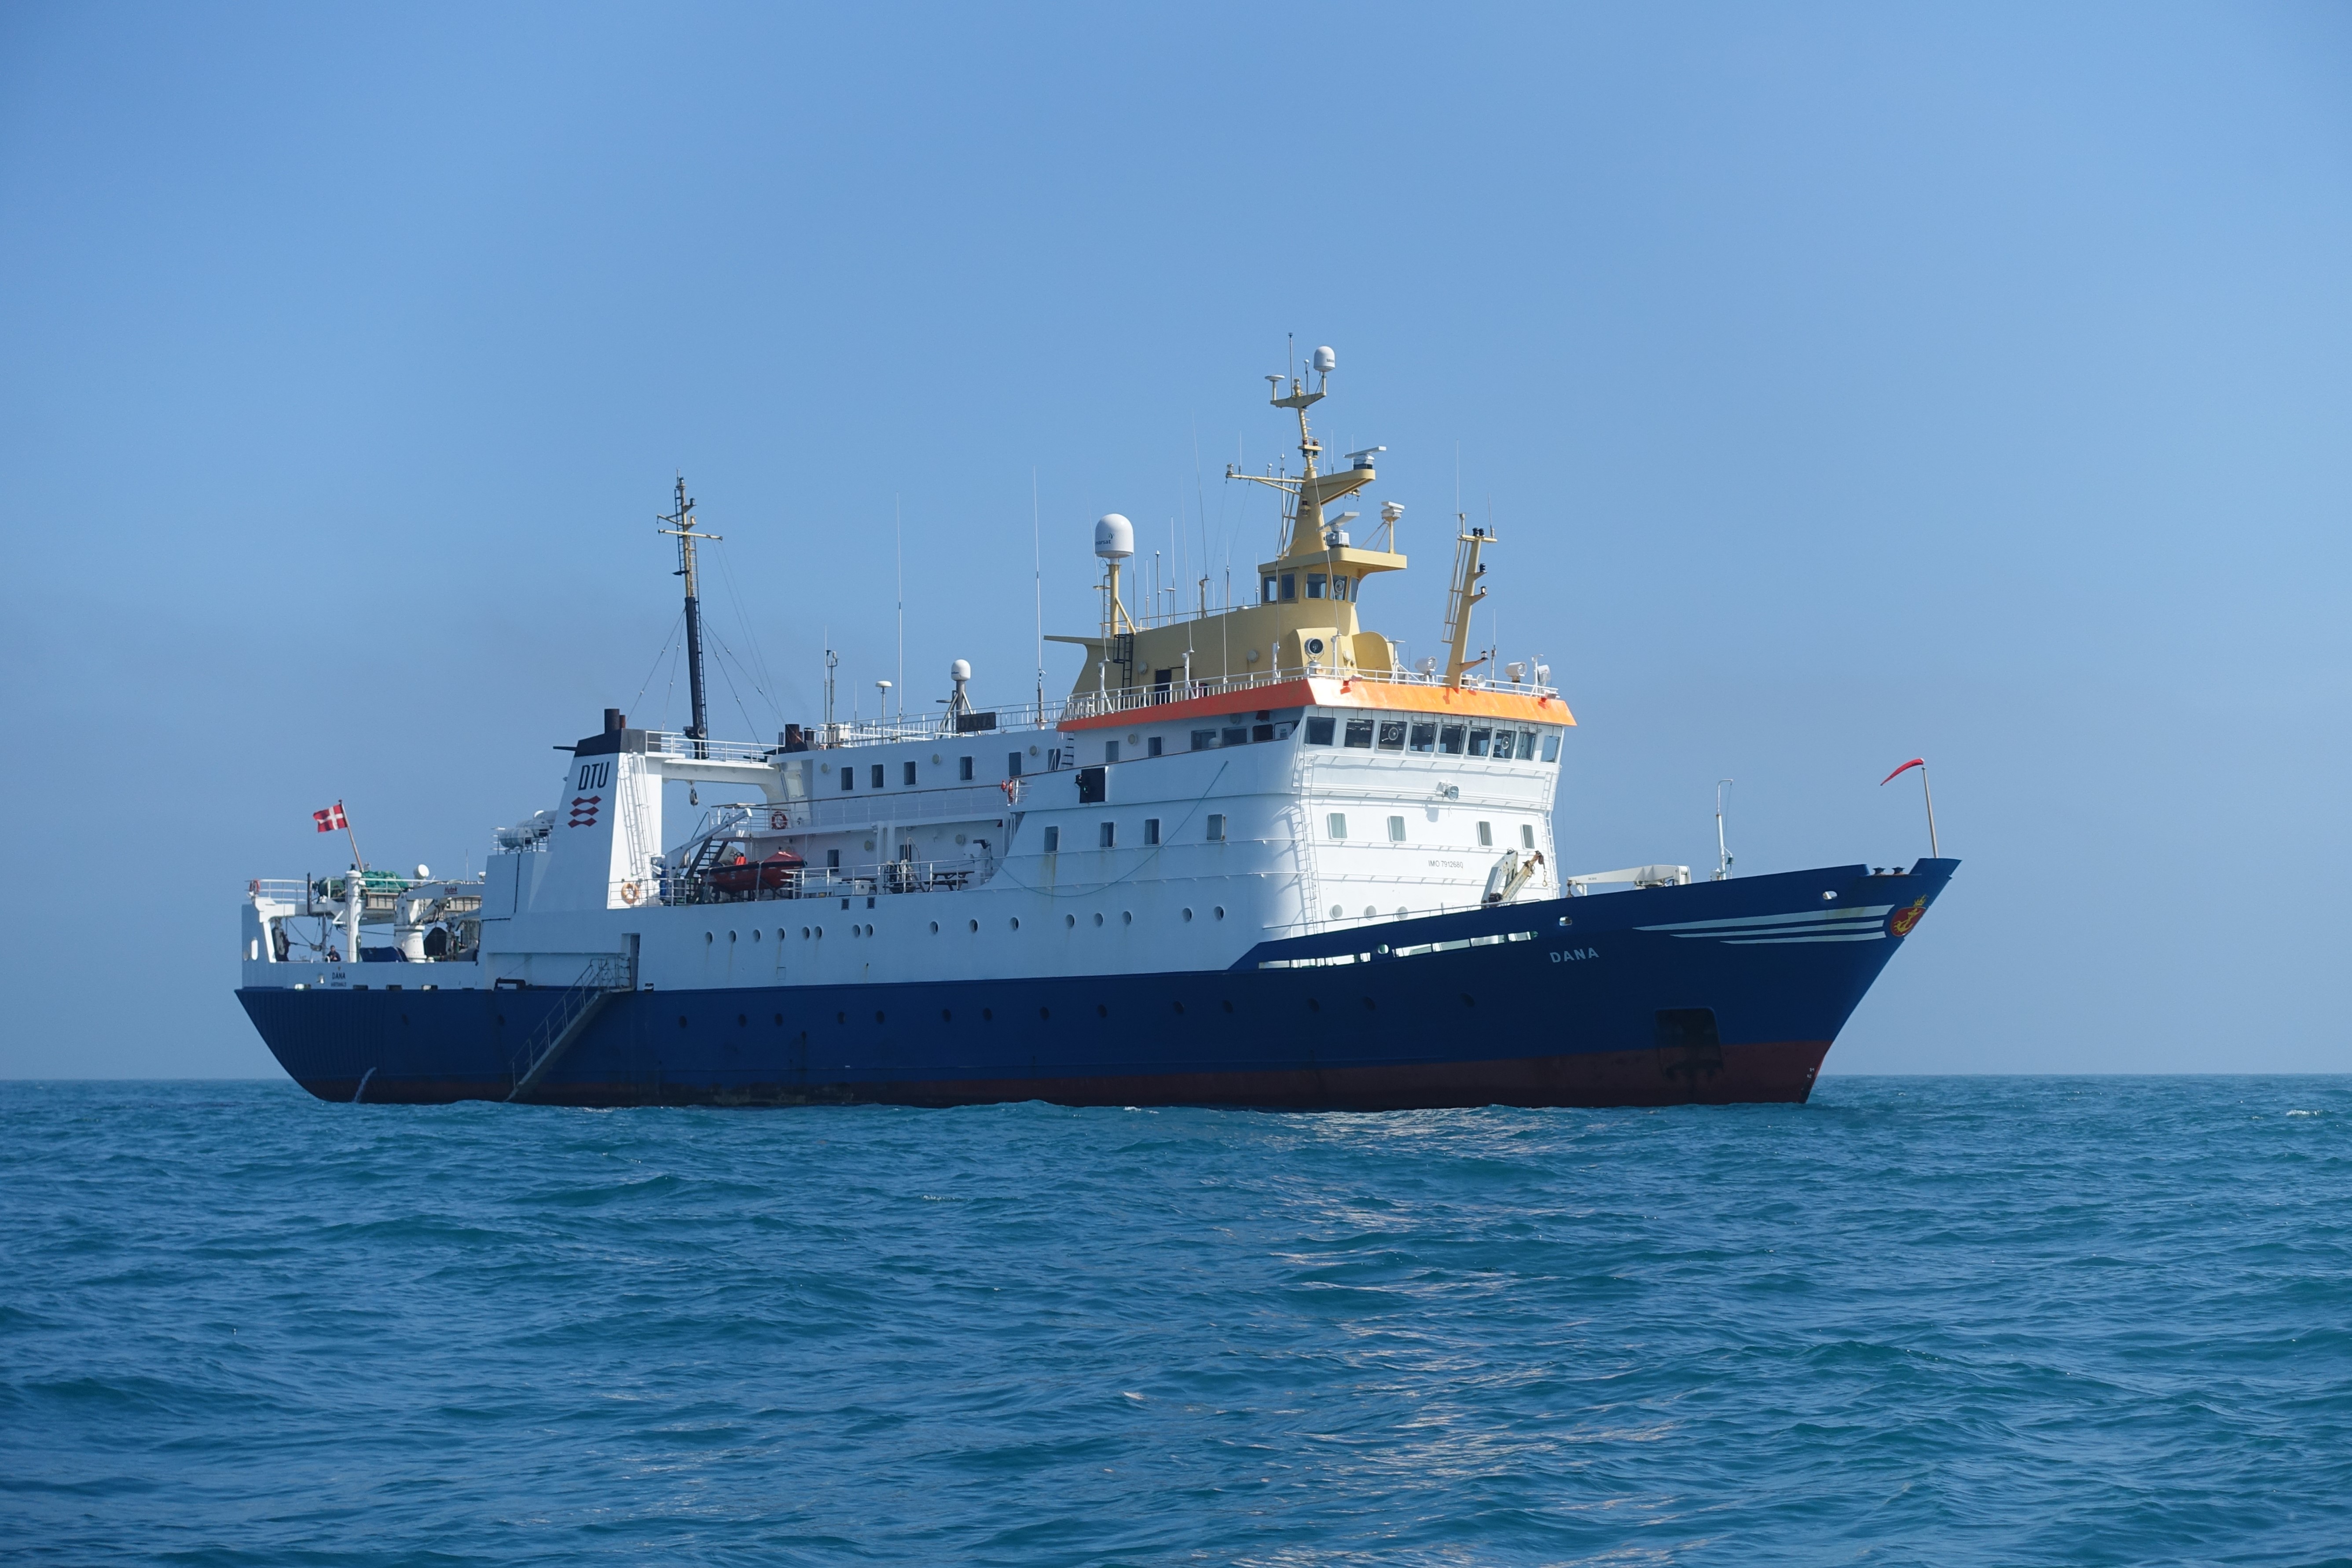 The research vessel Dana IV